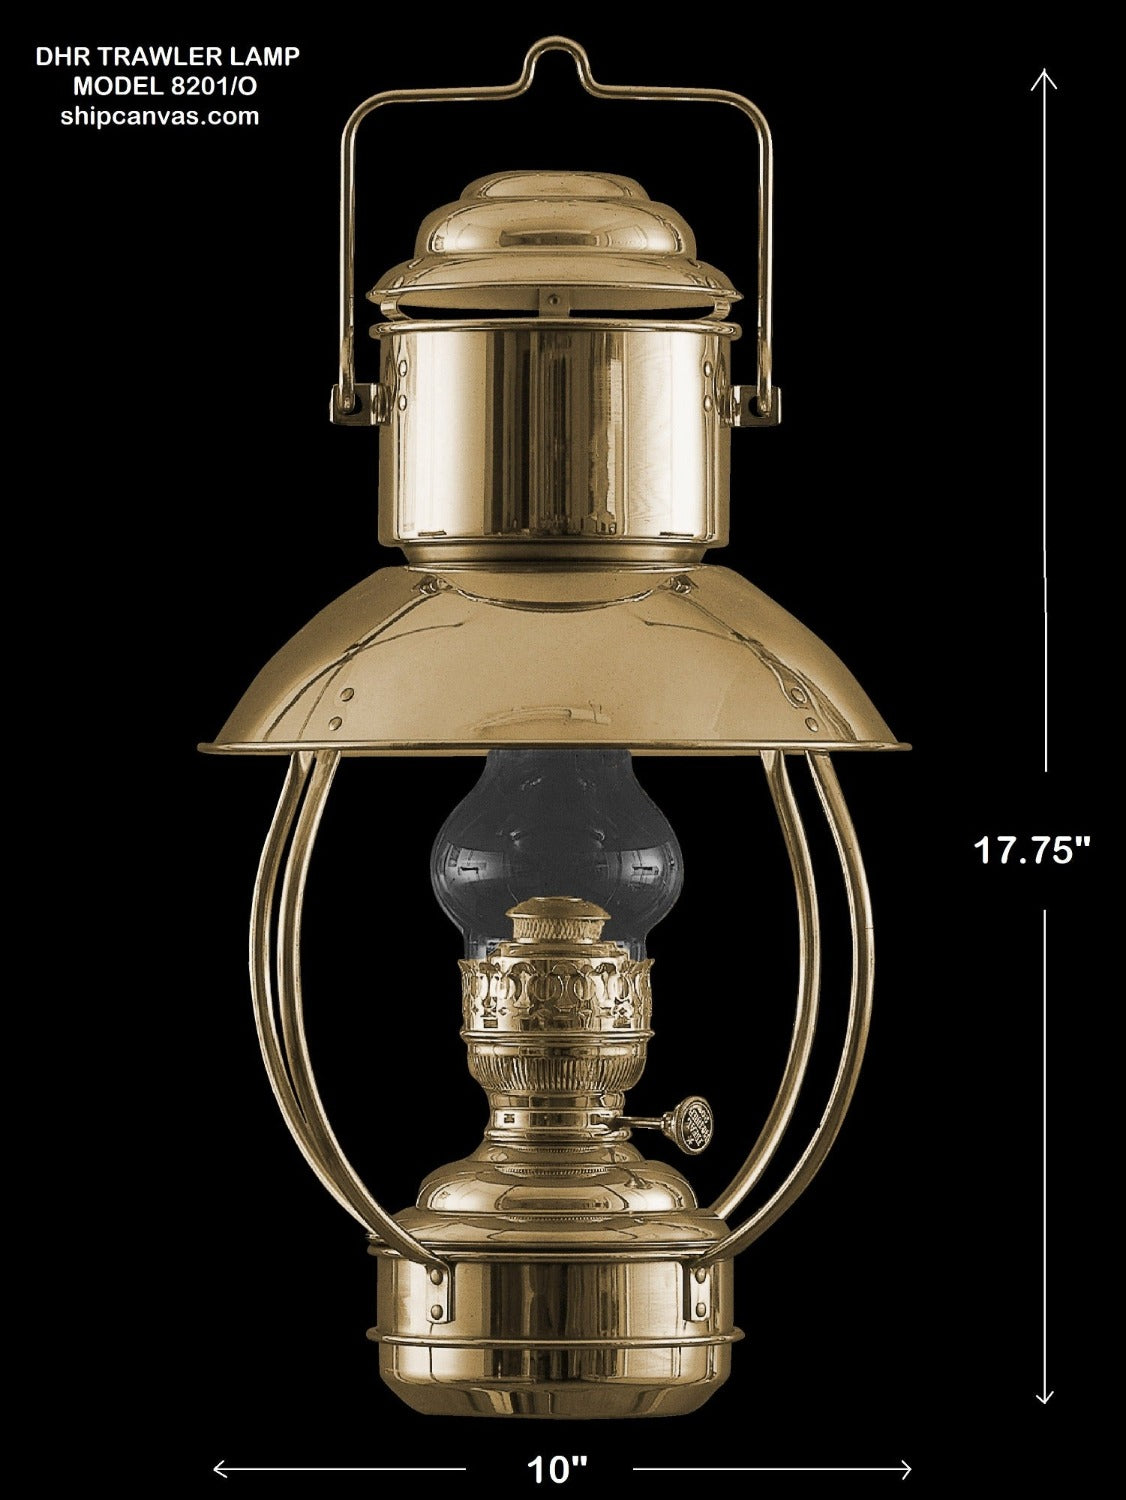 Copper Oil Lamp, Kerosene Lantern, Wick Gas Handmade Paraffin